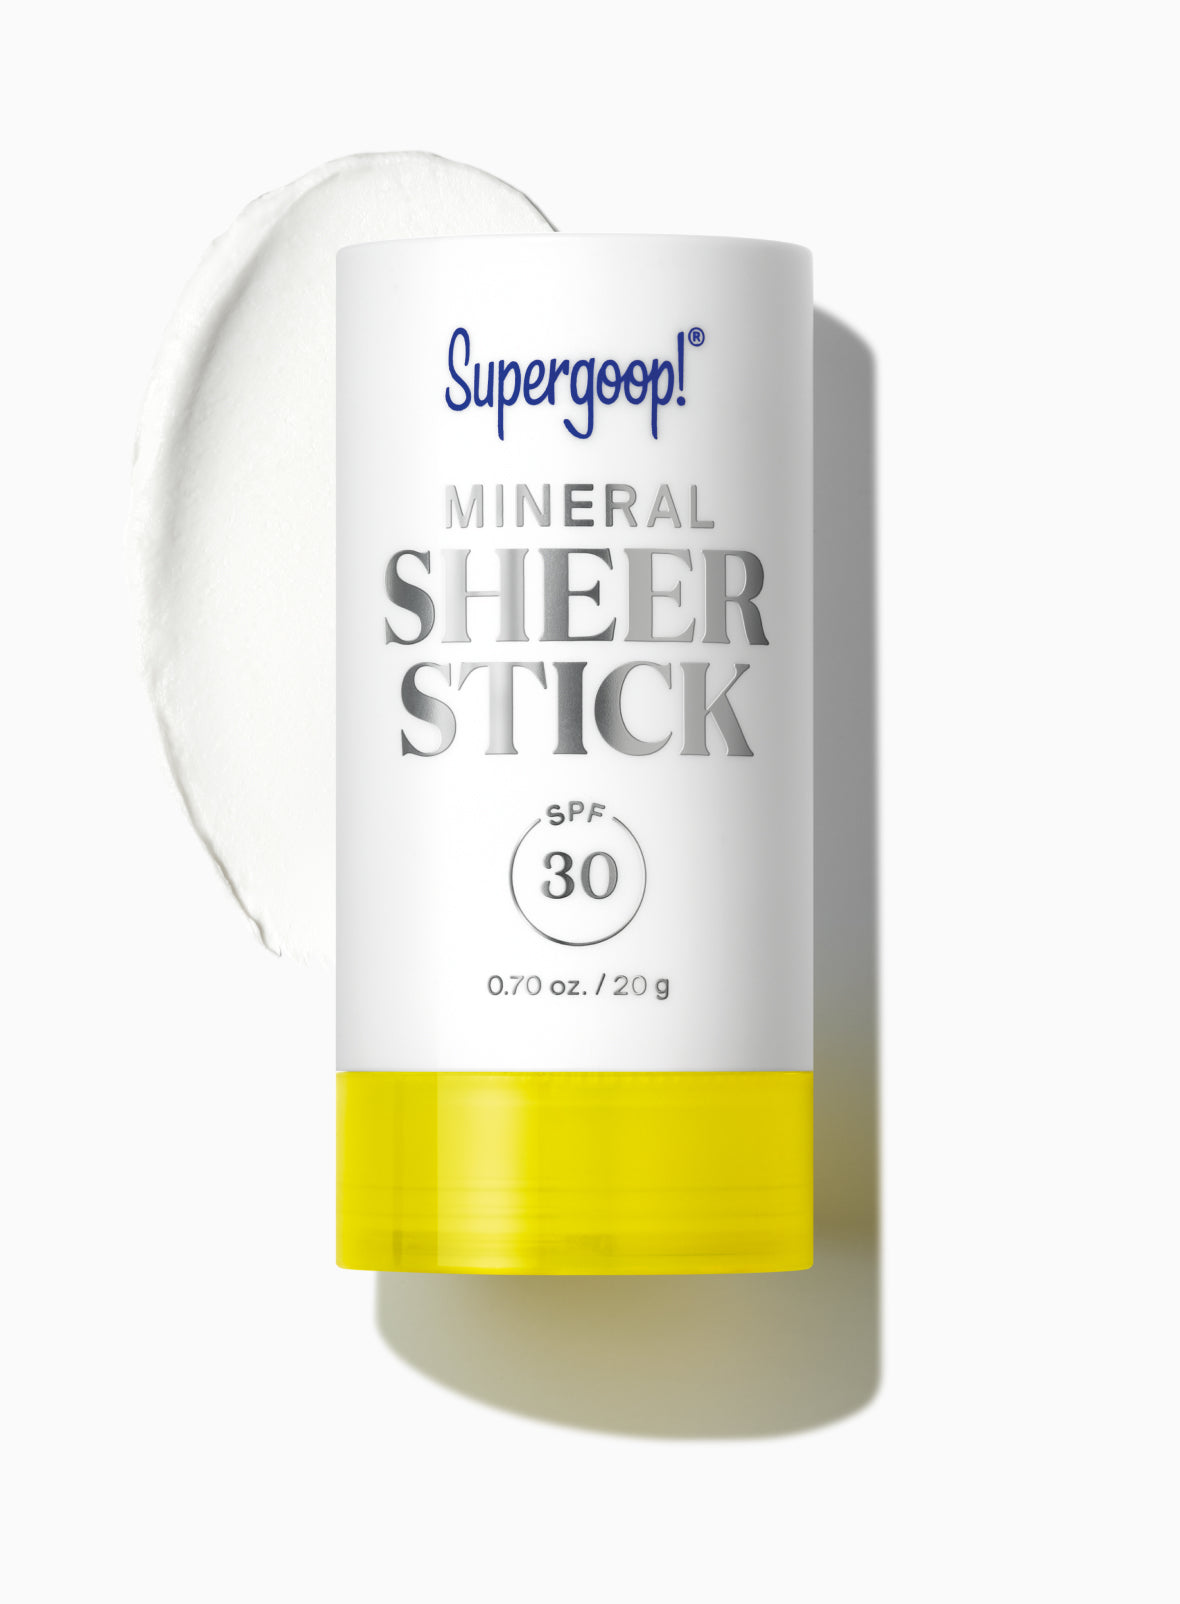 Mineral Sheer Stick SPF 30 Sunscreen 0.70 oz. | Supergoop!